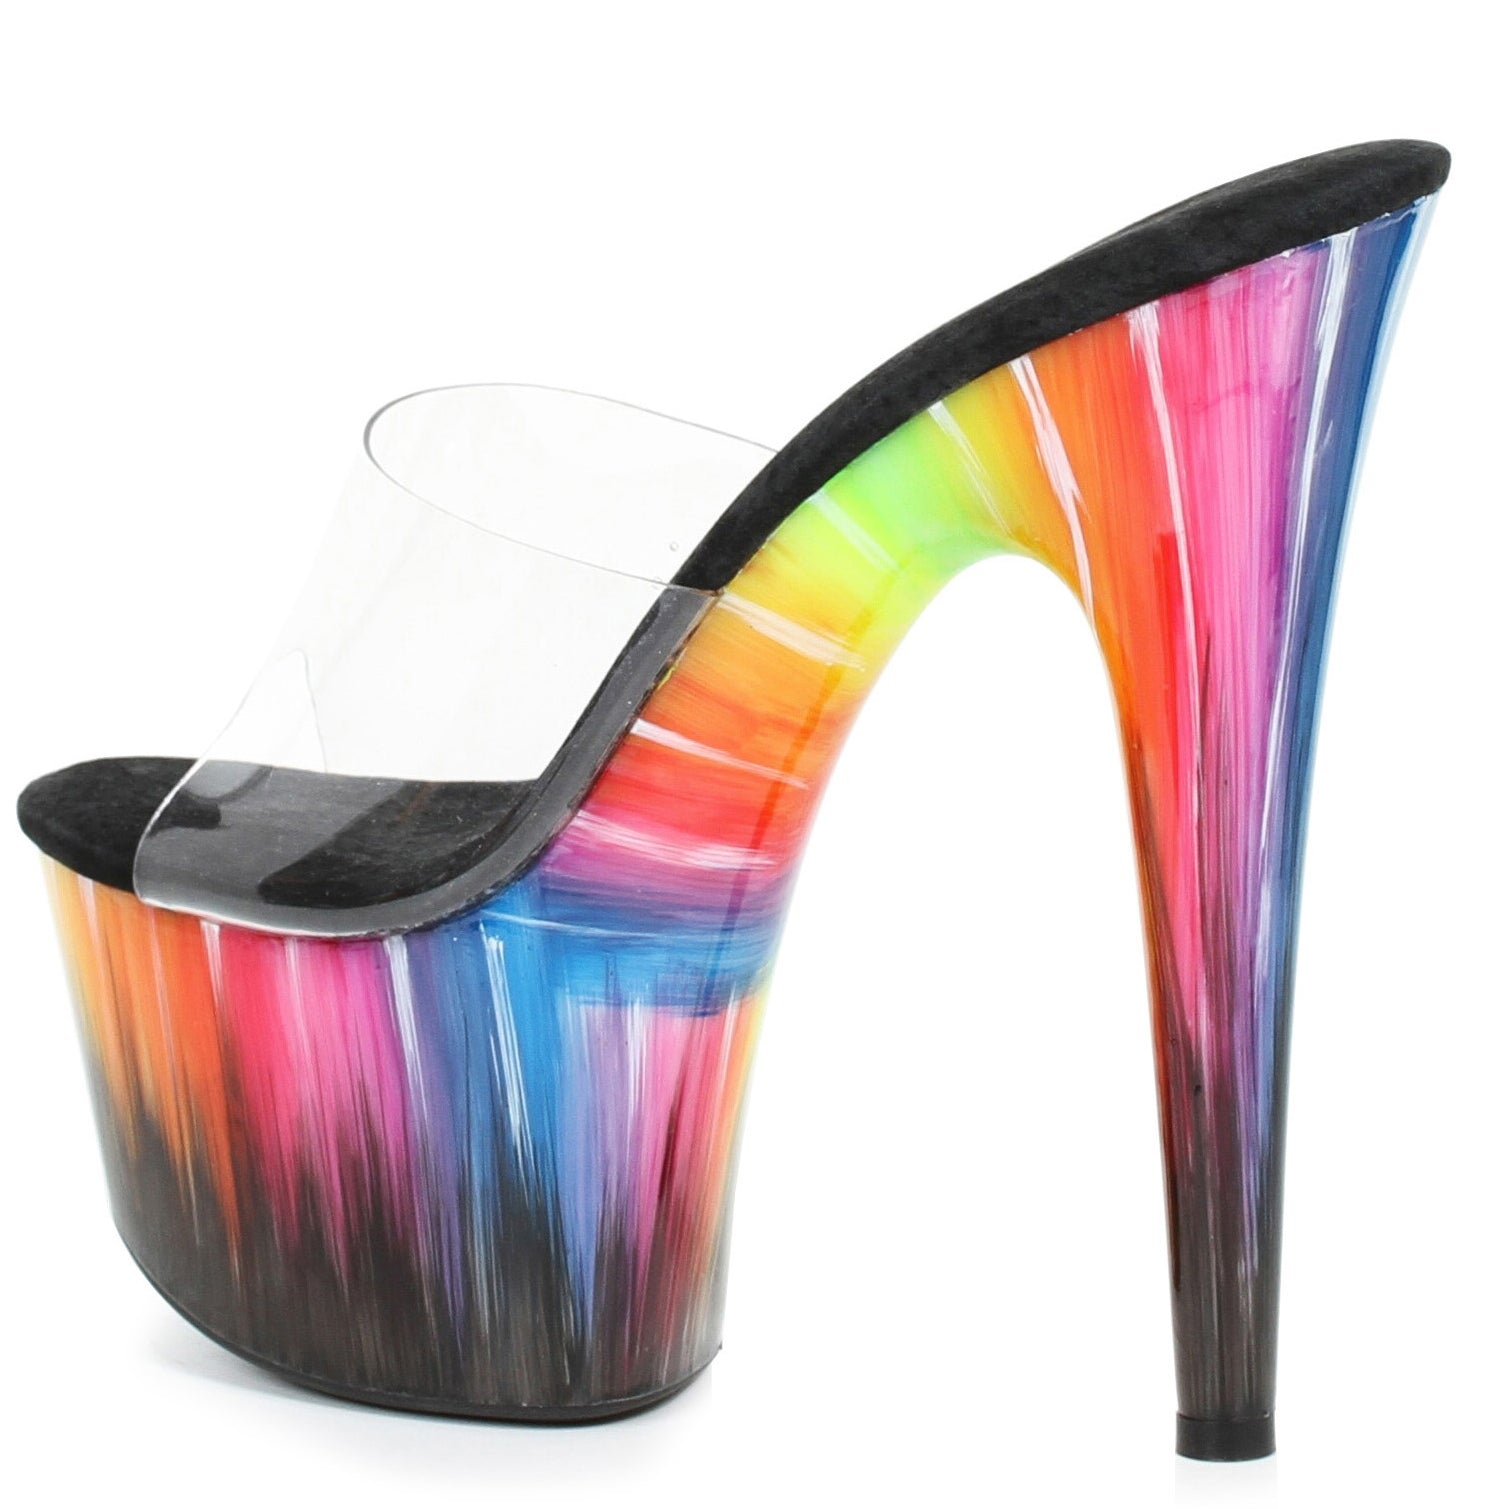 7 Inch Sandal With Rainbow Design